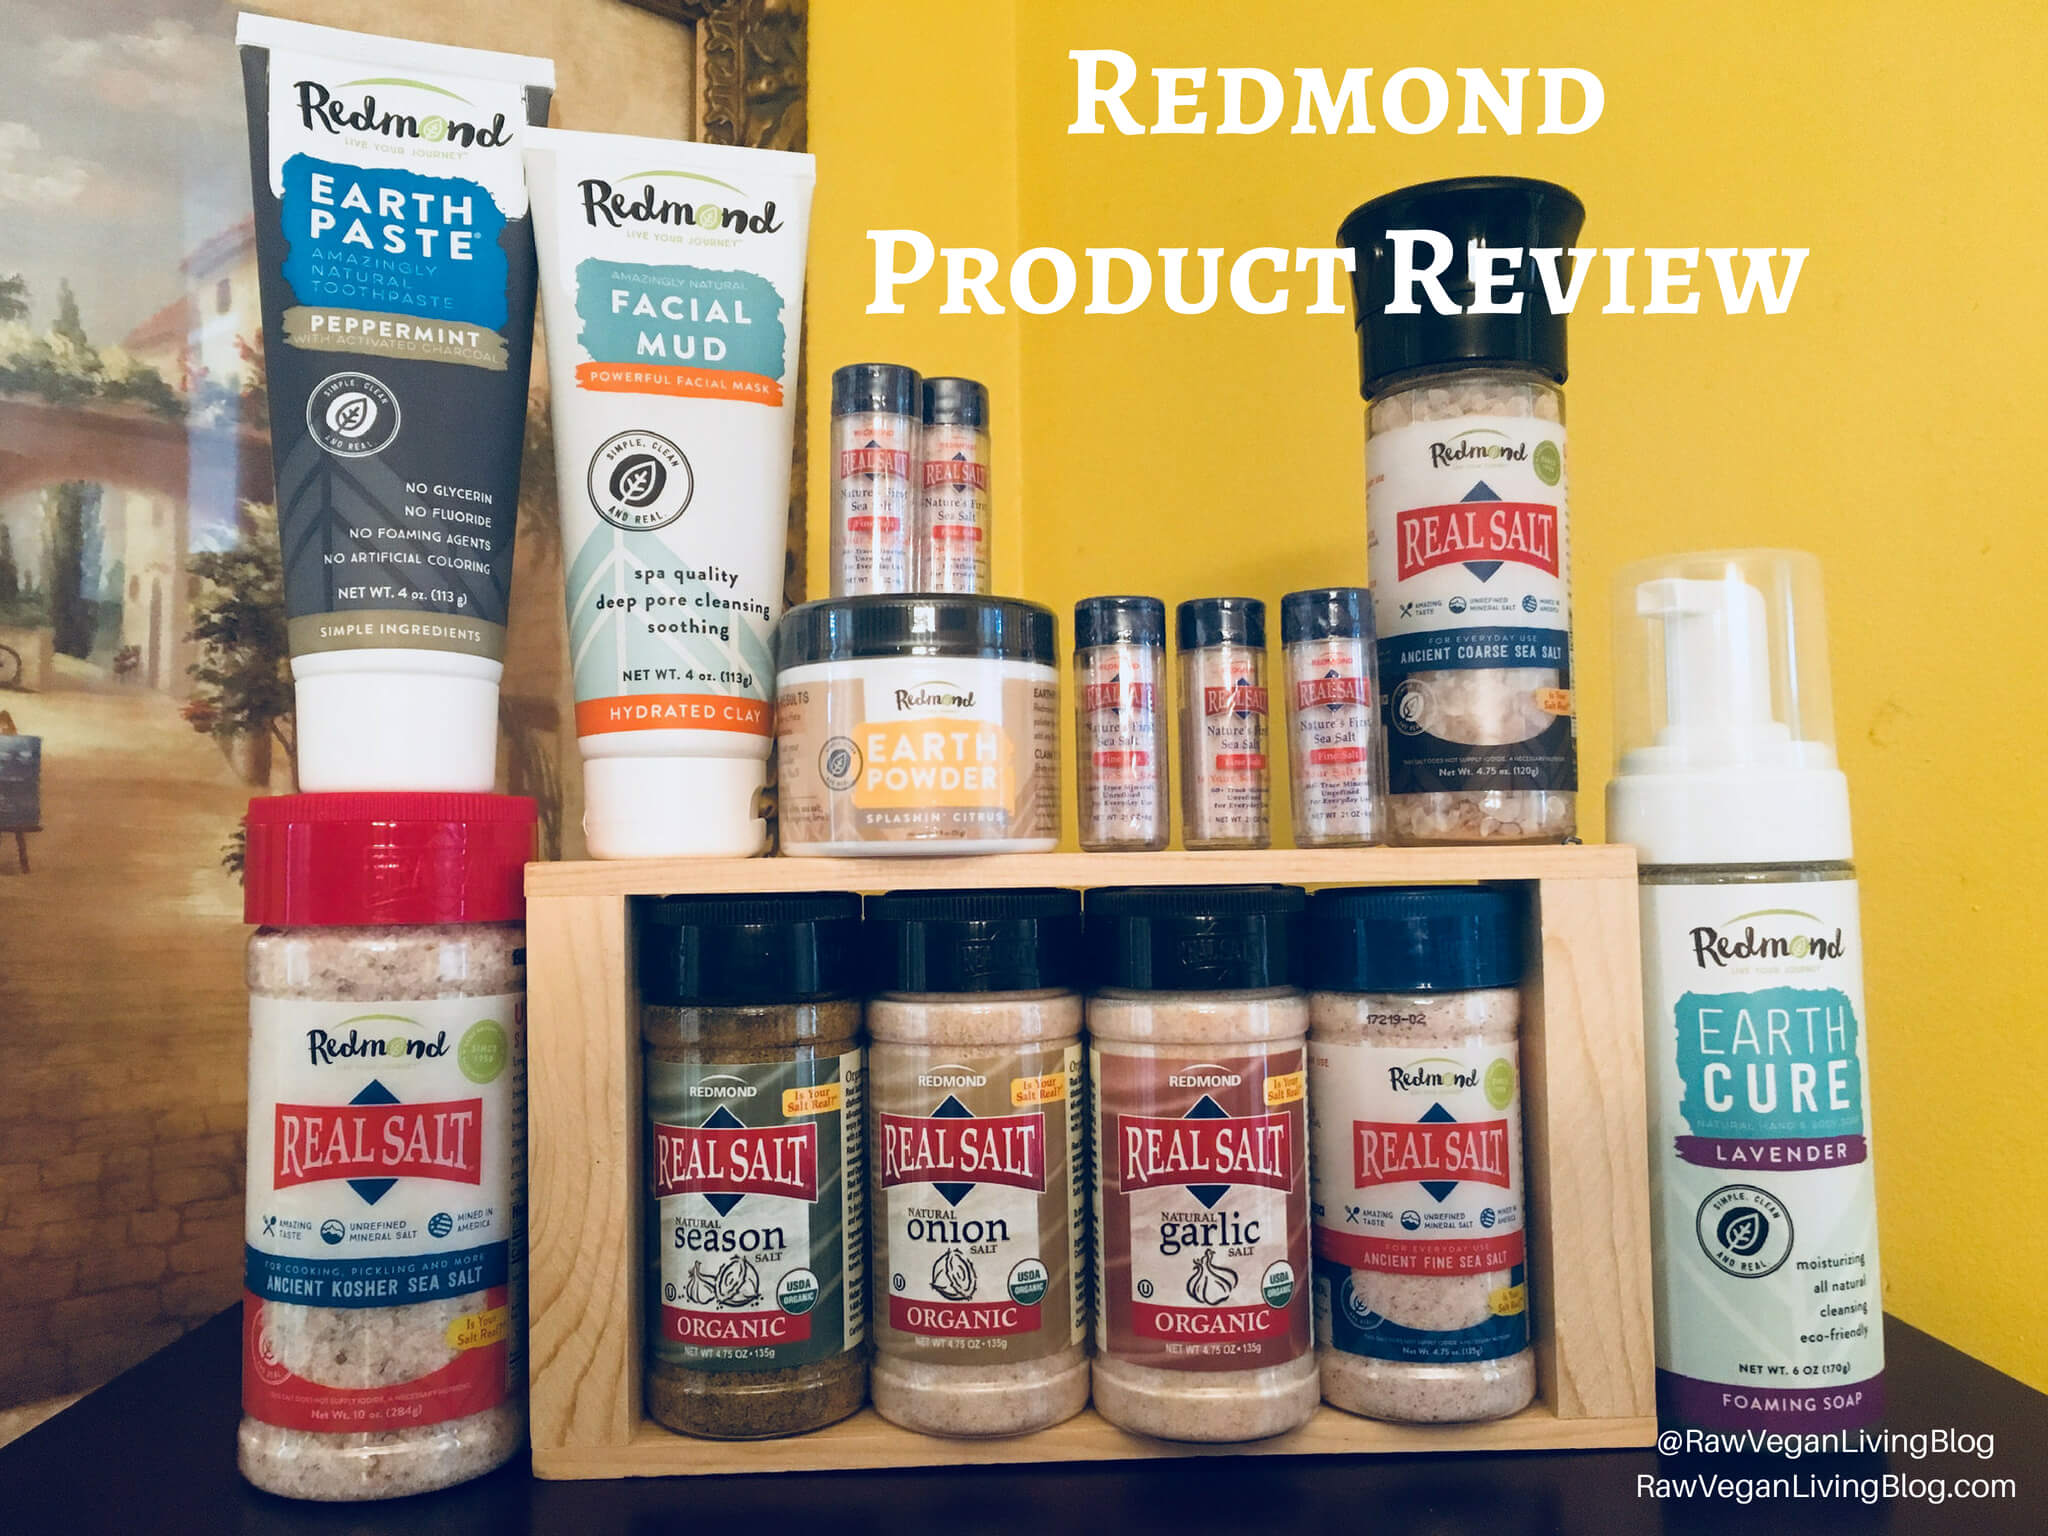 redmond-real-salt-raw-vegan-living